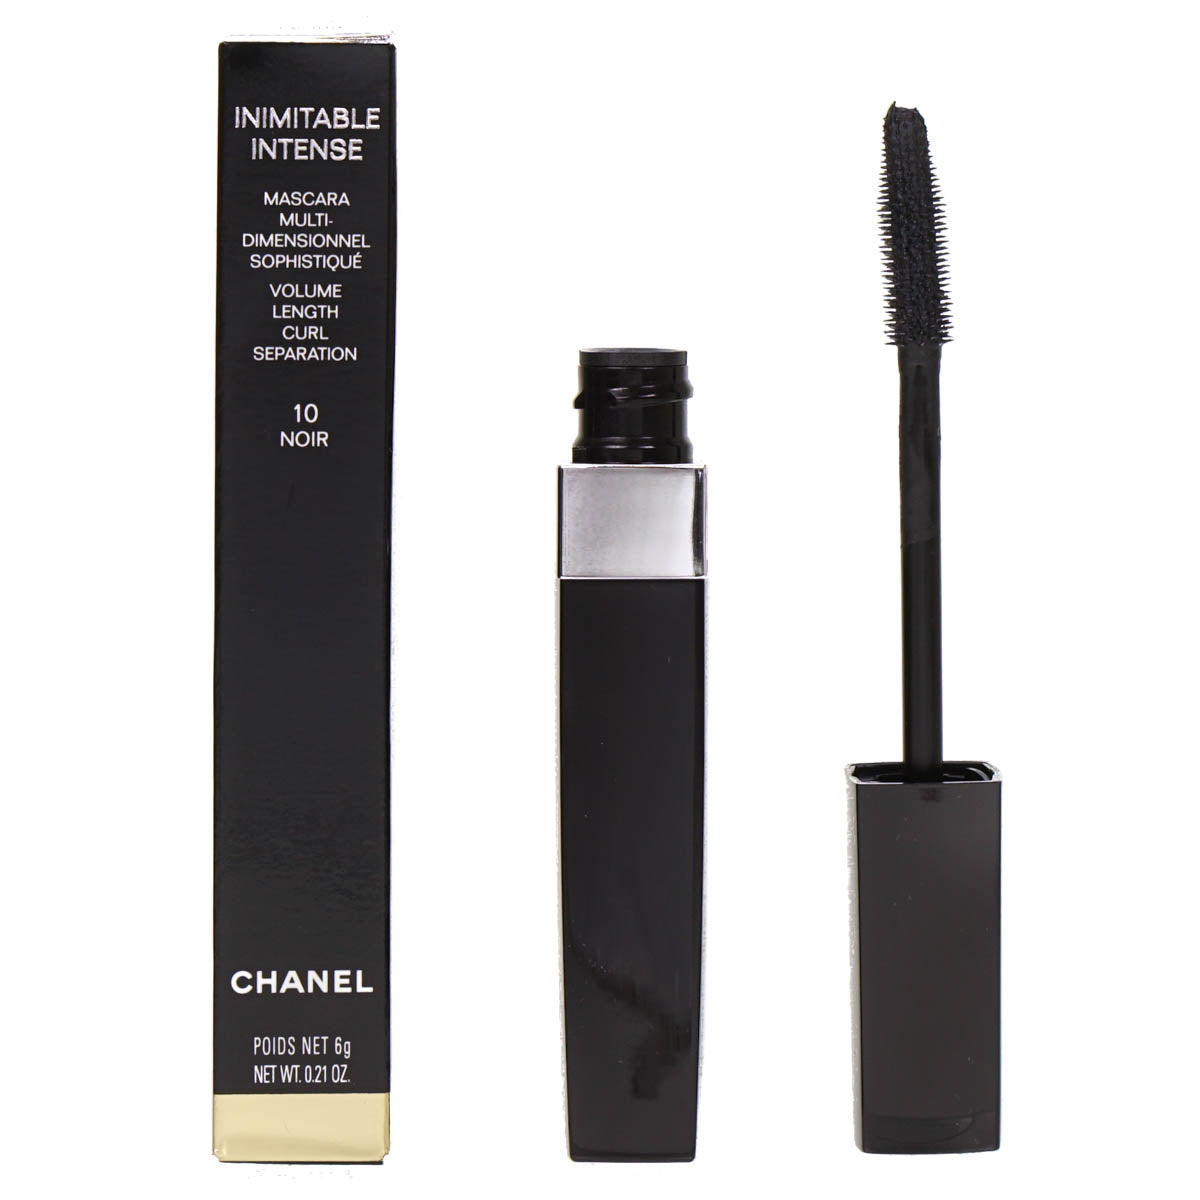 Chanel Inimitable Intense Mascara 10 Noir 6g